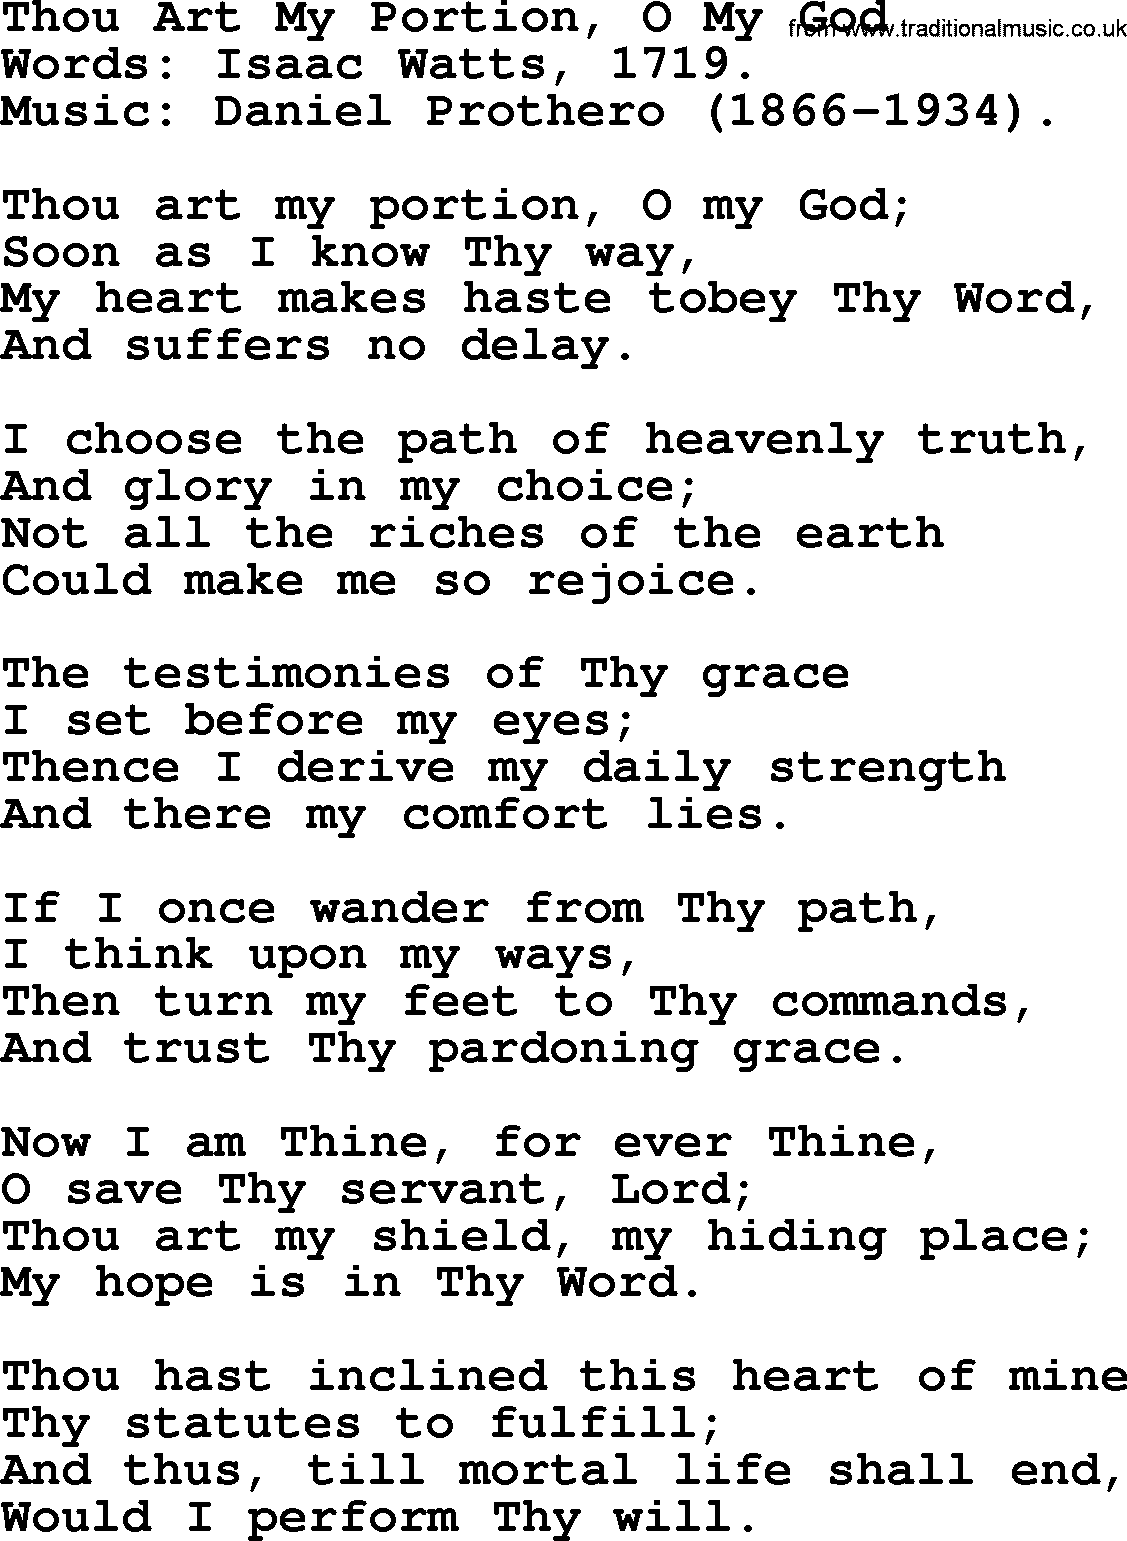 Isaac Watts Christian hymn: Thou Art My Portion, O My God- lyricss